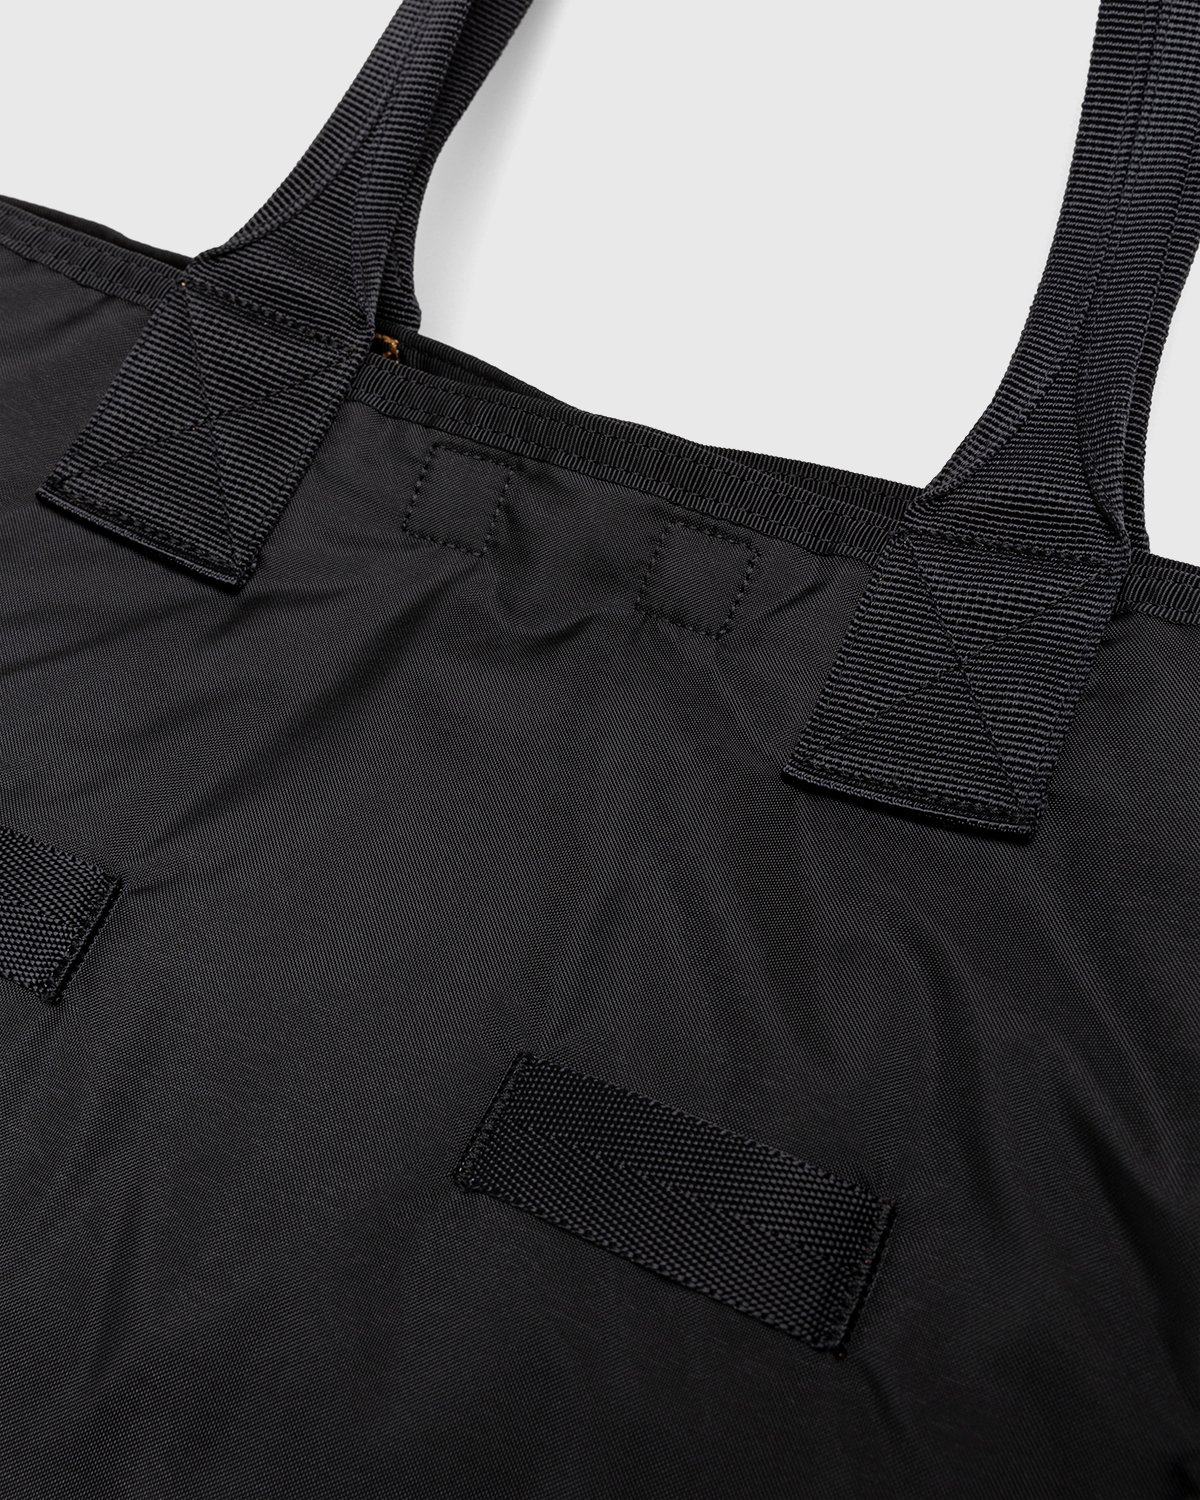 Porter-Yoshida & Co. - 2-Way Tote Bag Black - Accessories - Black - Image 5